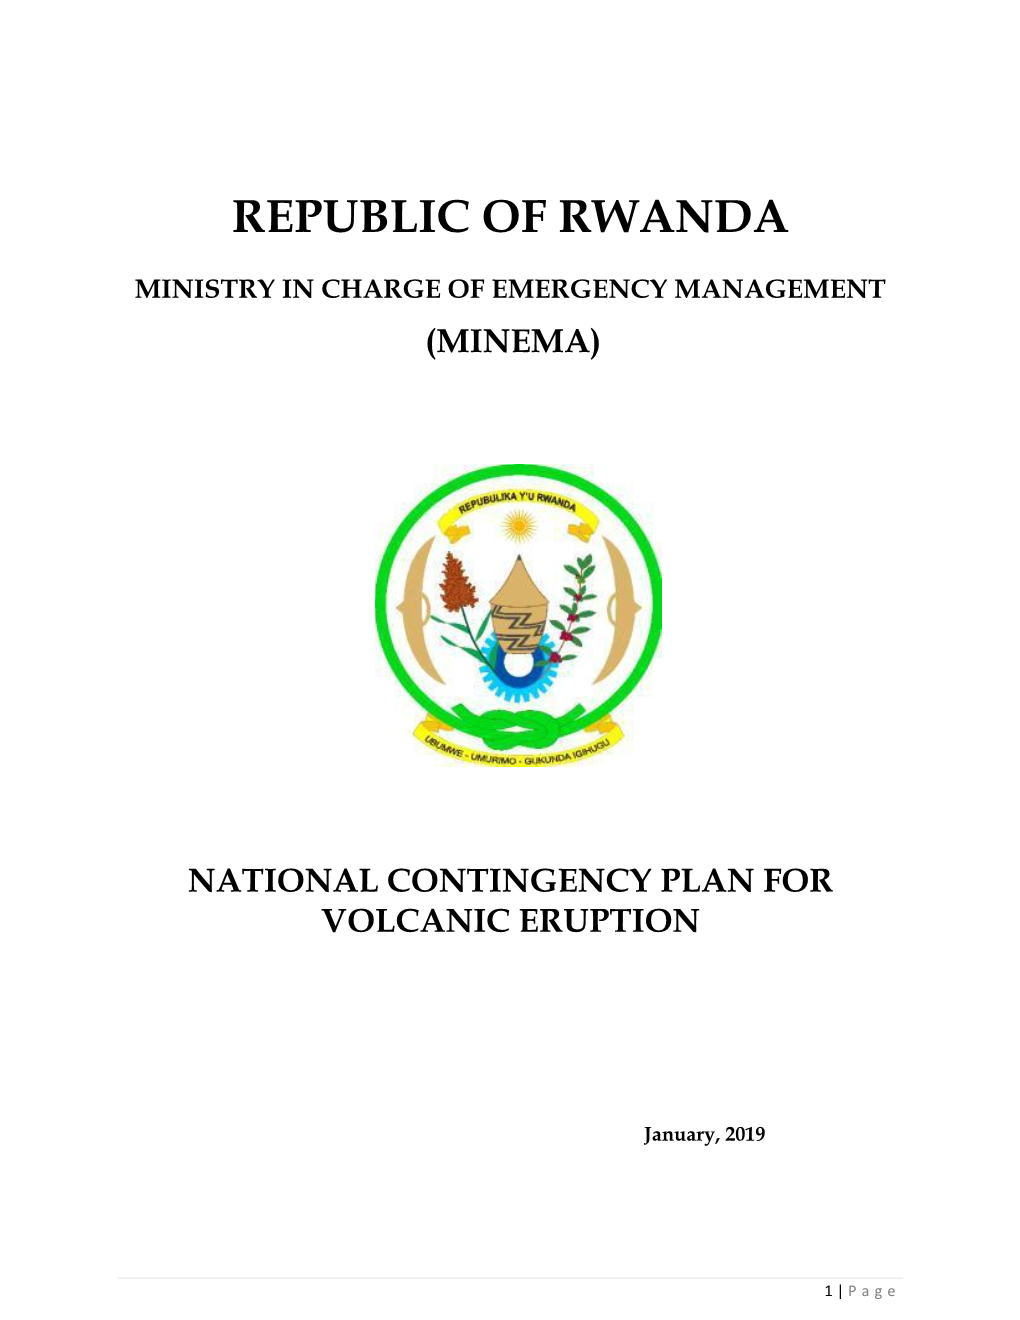 National Contingency Plan for Volcanic Eruption